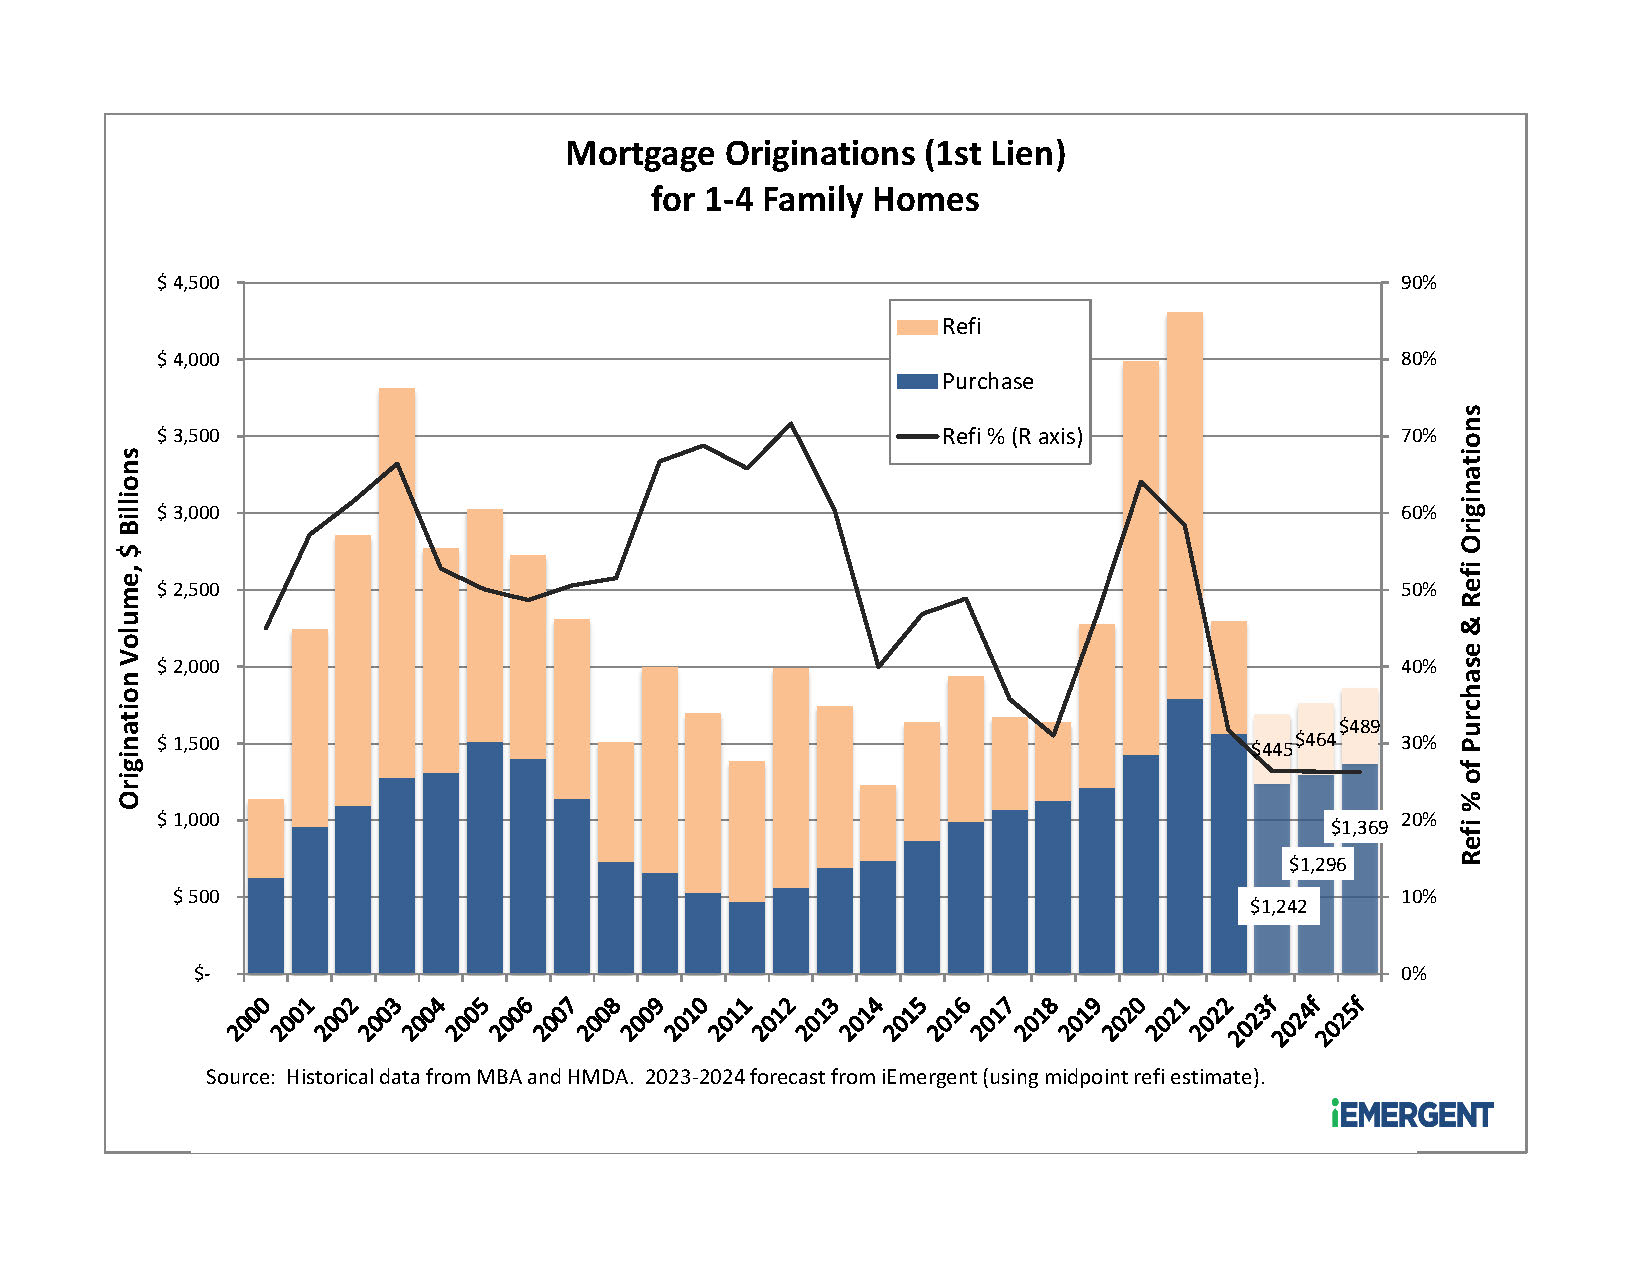 iEmergent mortgage forecast through 2025